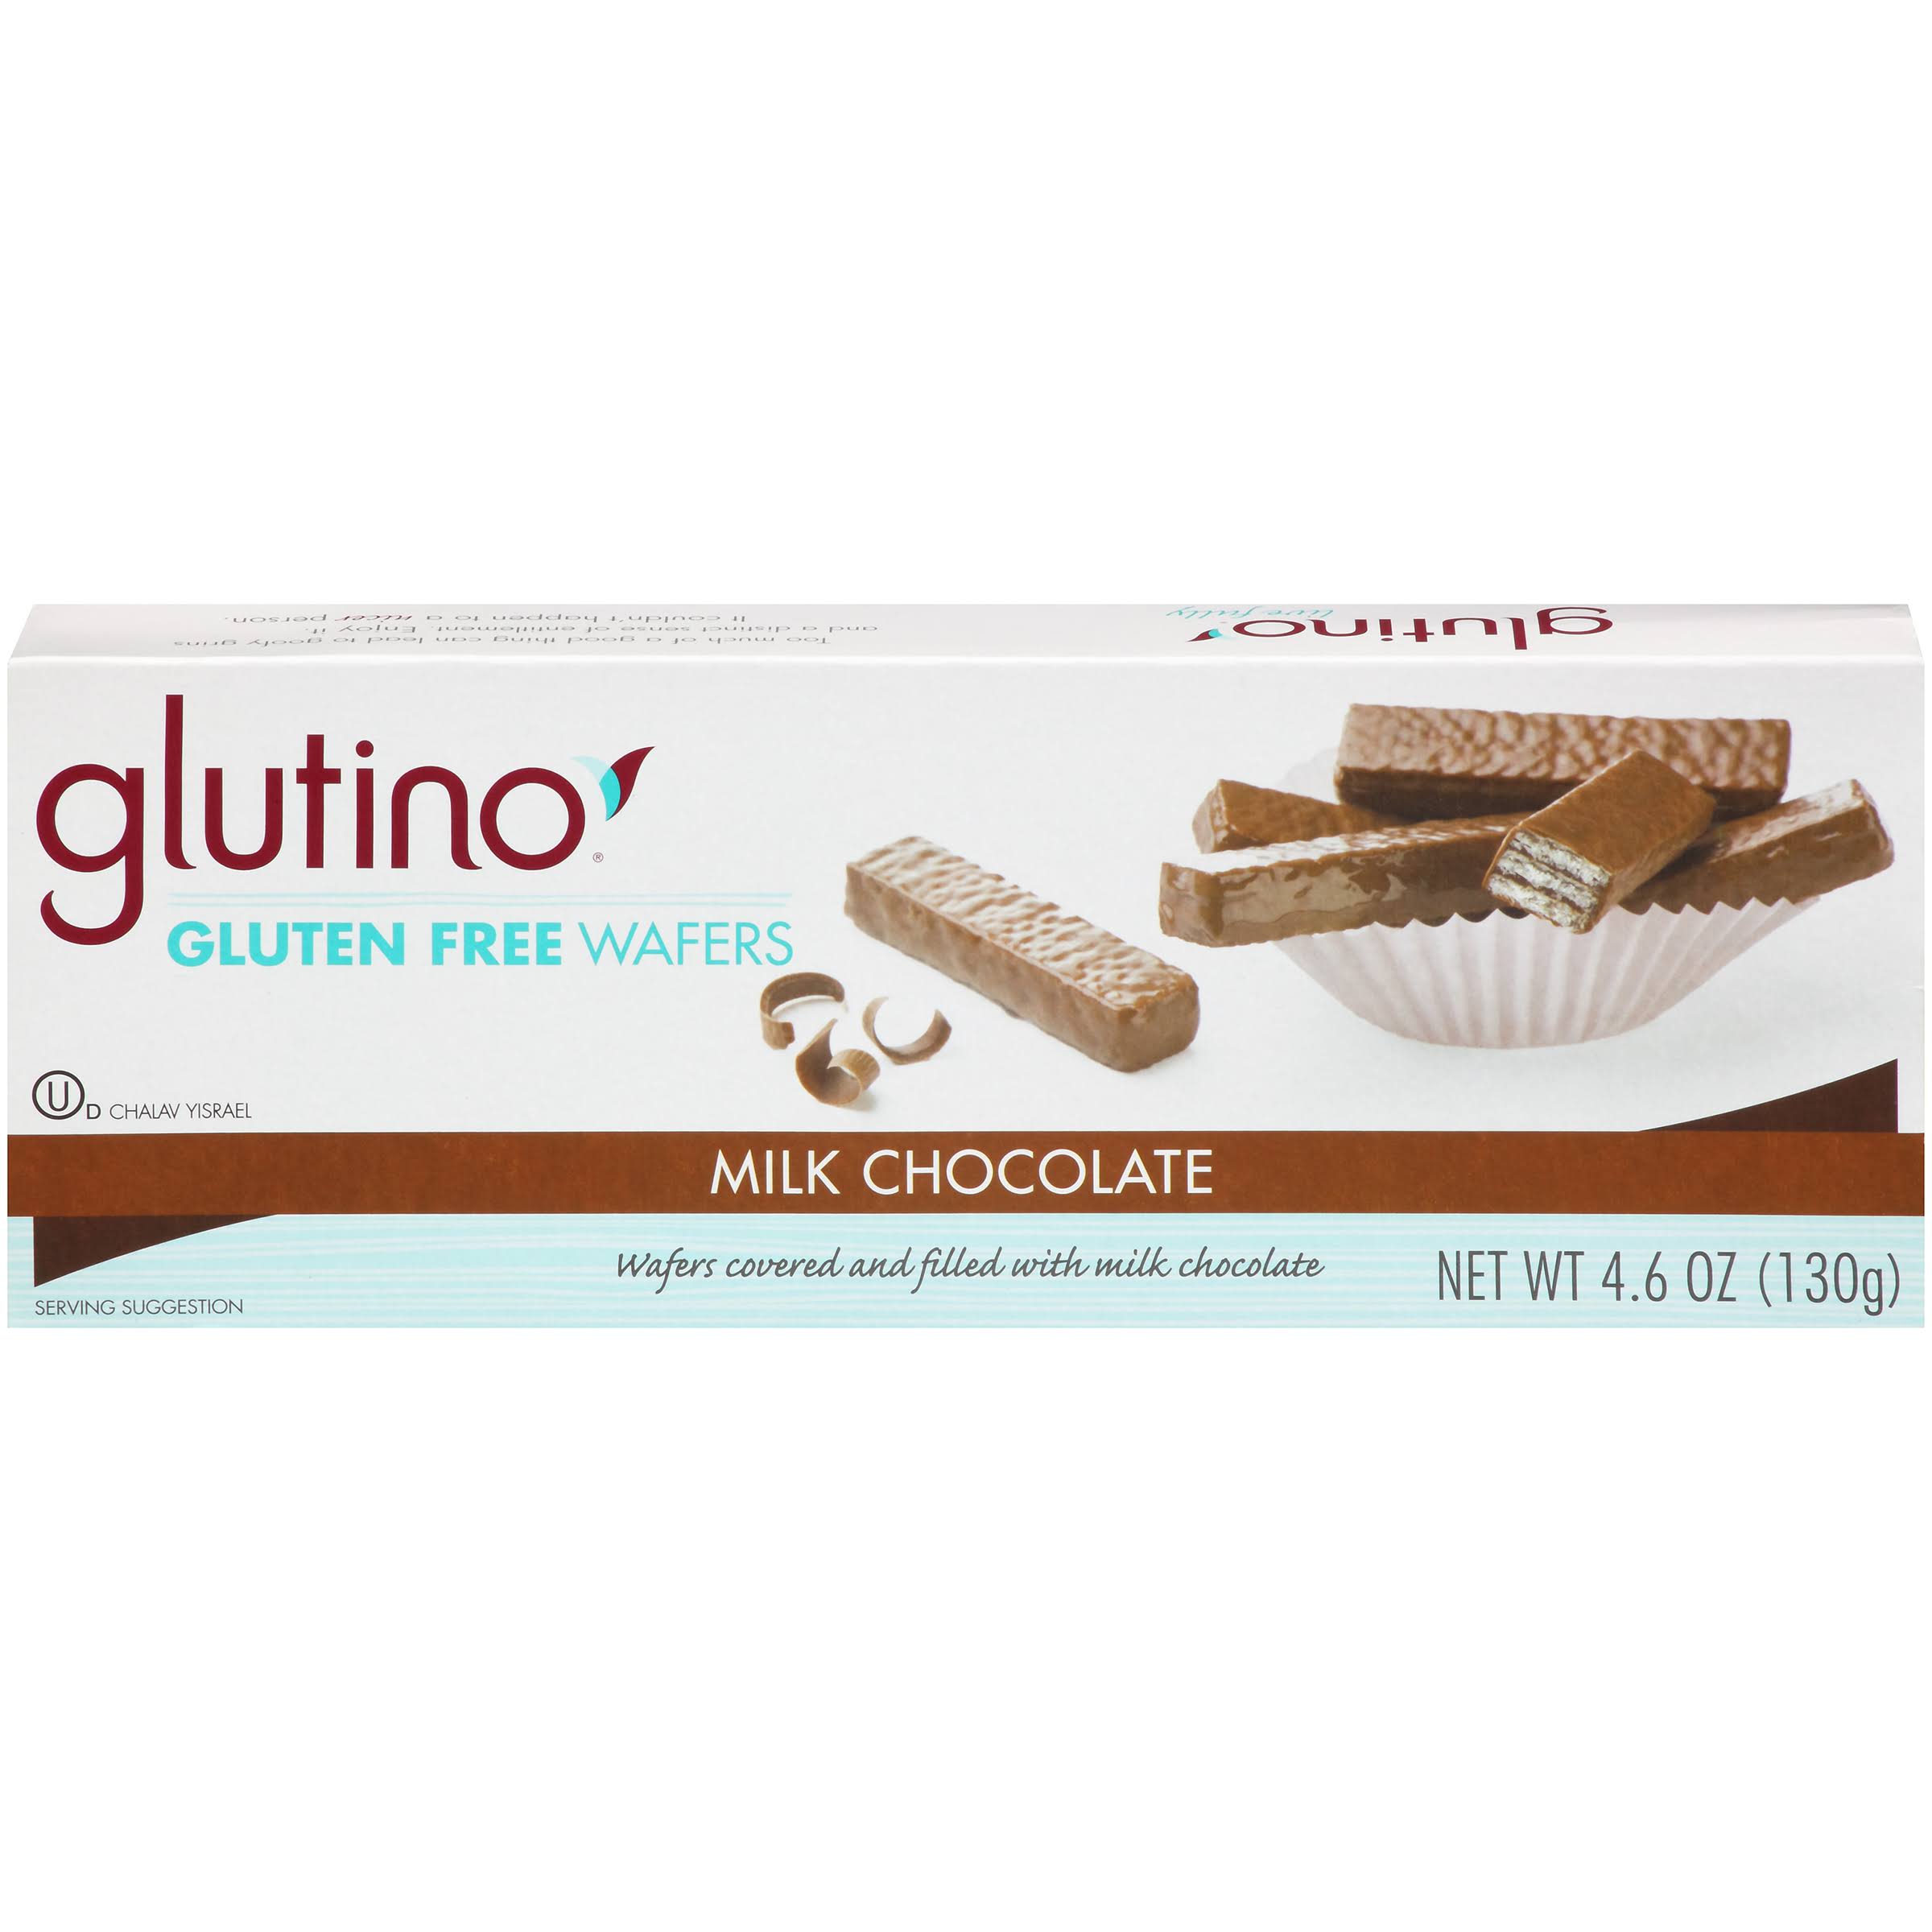 Glutino Gluten Free Wafers - Milk Chocolate, 4.6oz